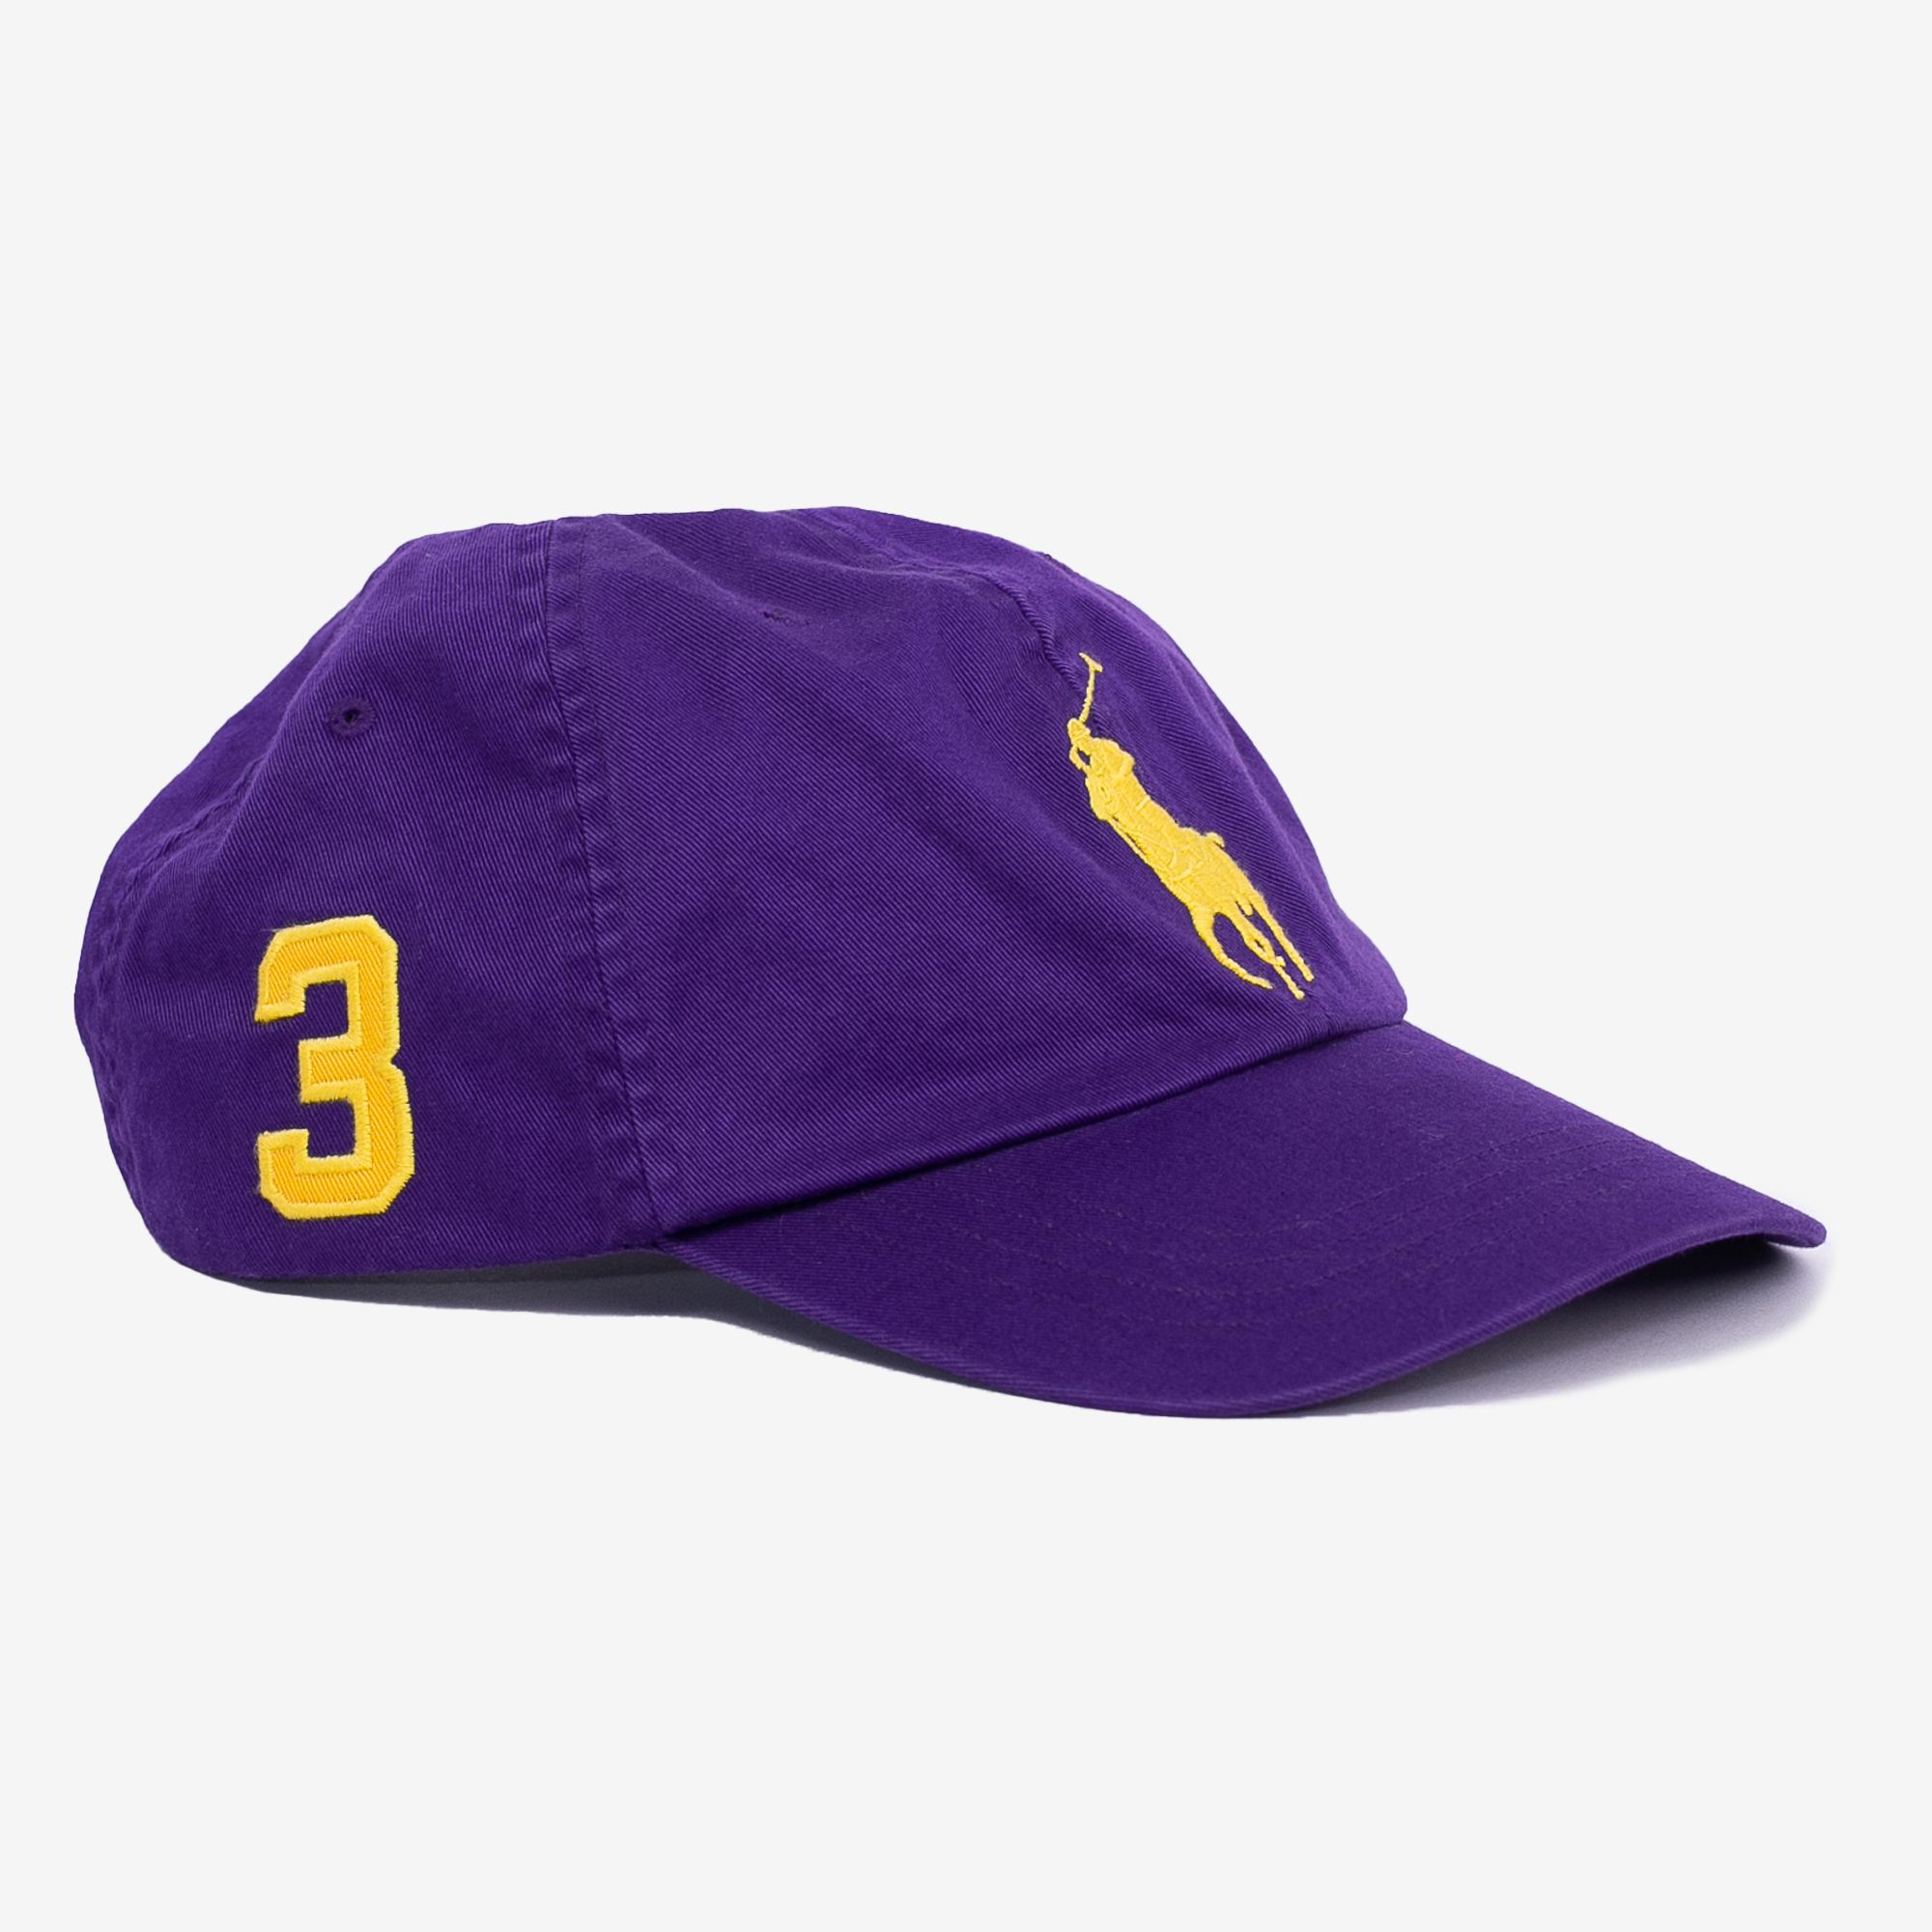  Ralph Lauren Big Pony Athletic Twill Cap - Purple 